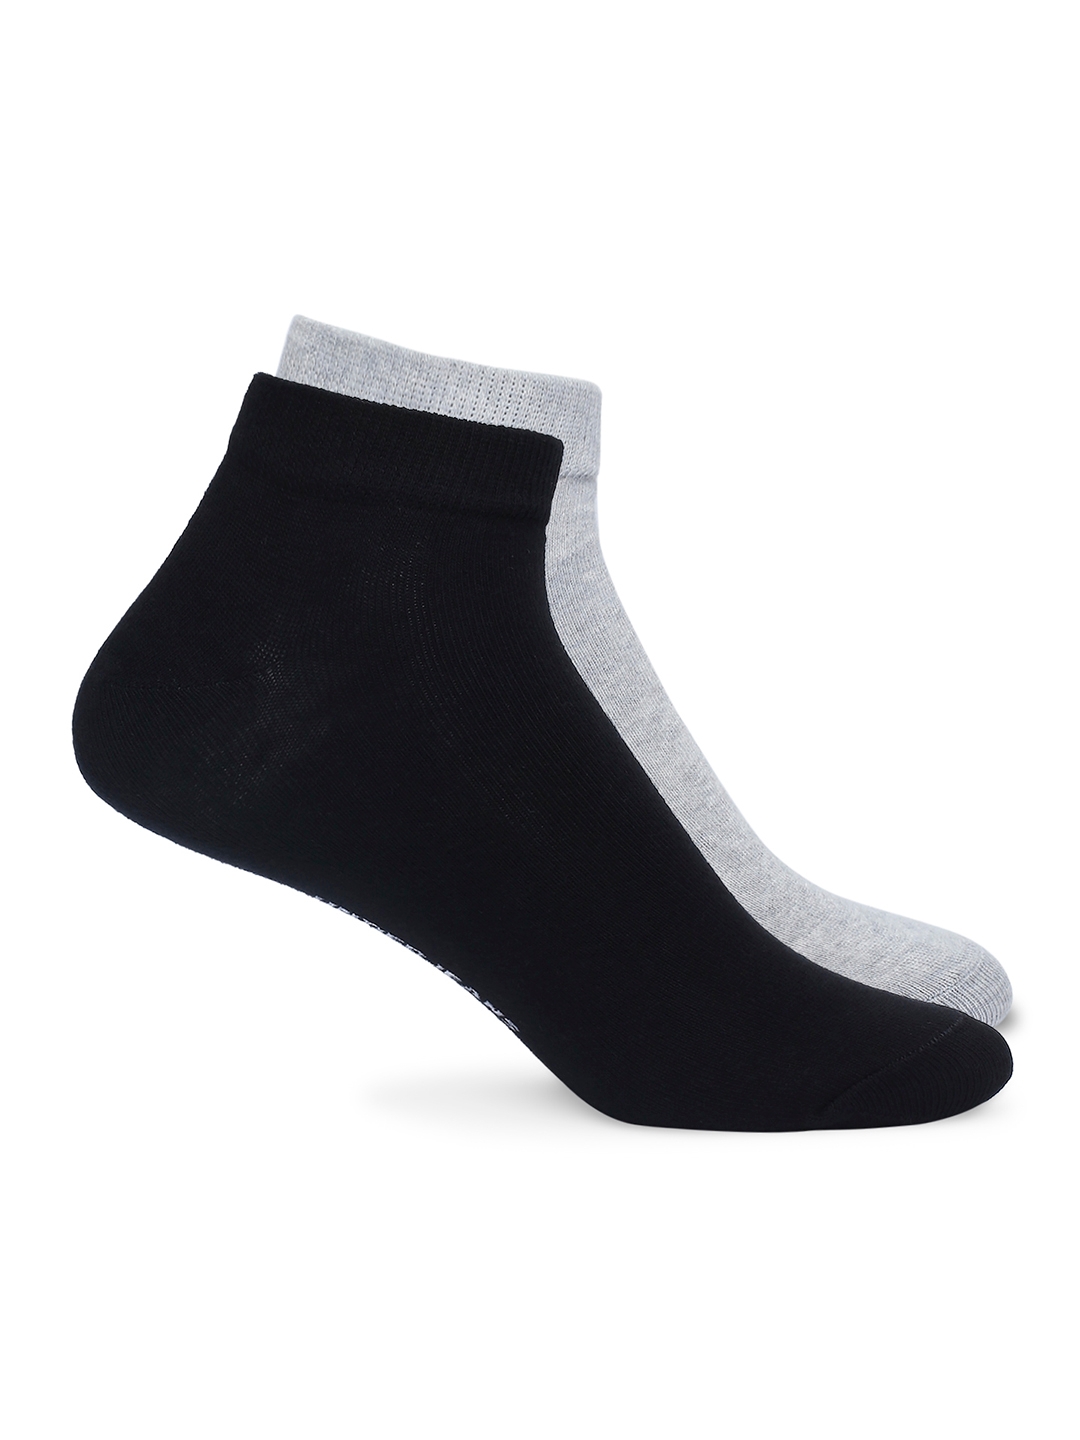 spykar | Underjeans By Spykar Men Grey Melange & Black Cotton Blend Sneaker Socks - Pack Of 2 0